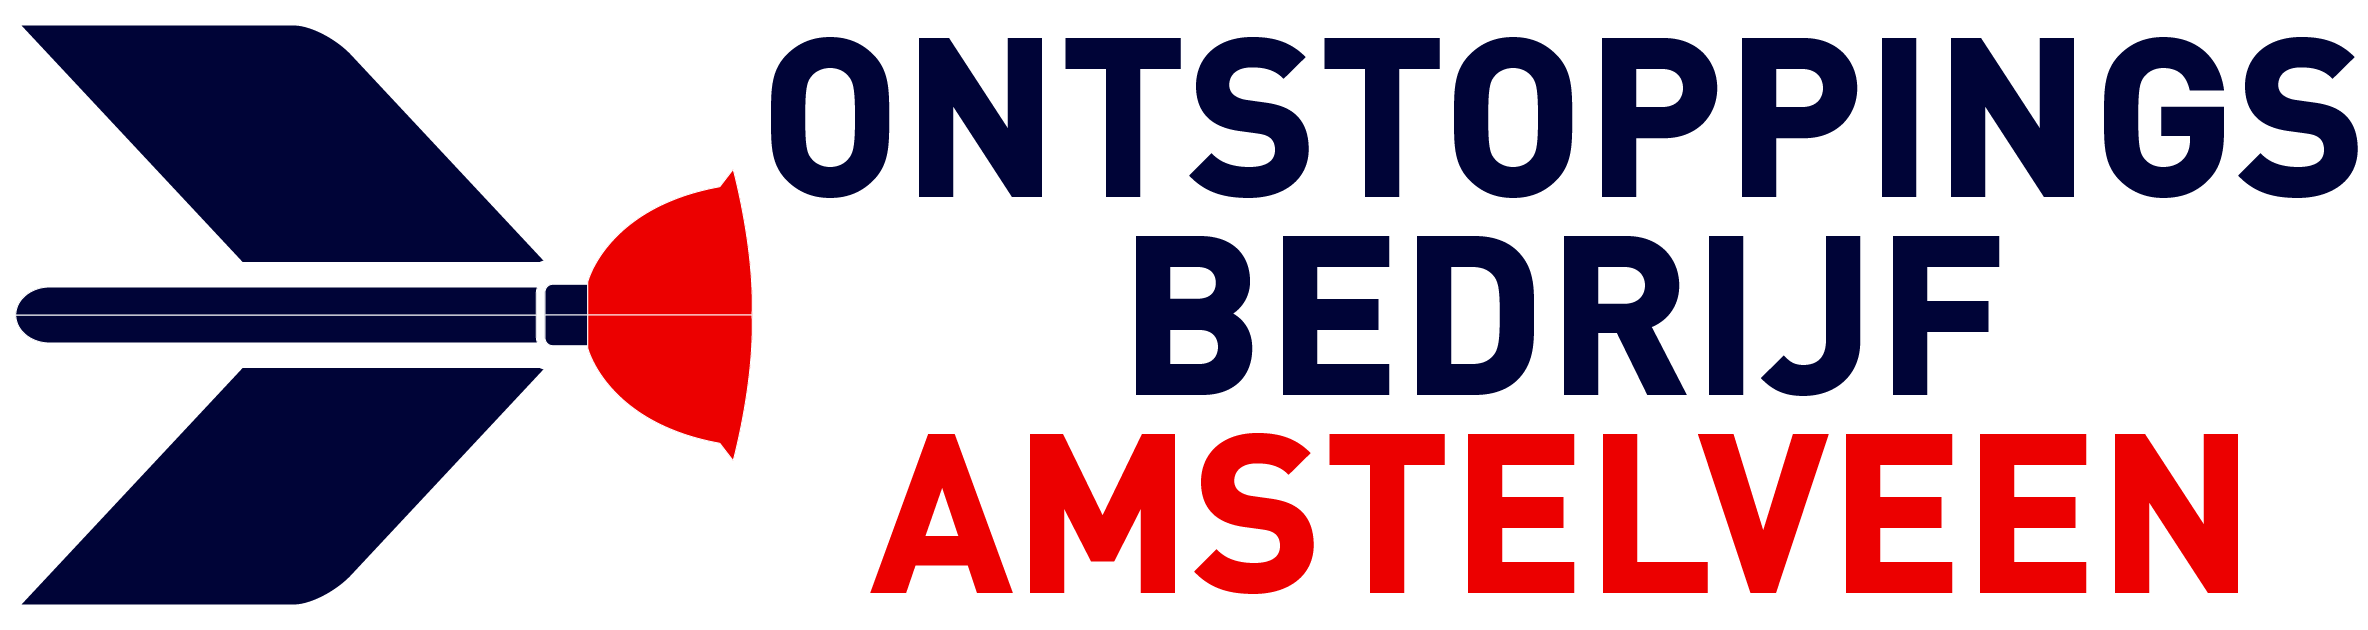 Ontstoppingsbedrijf Amstelveen logo